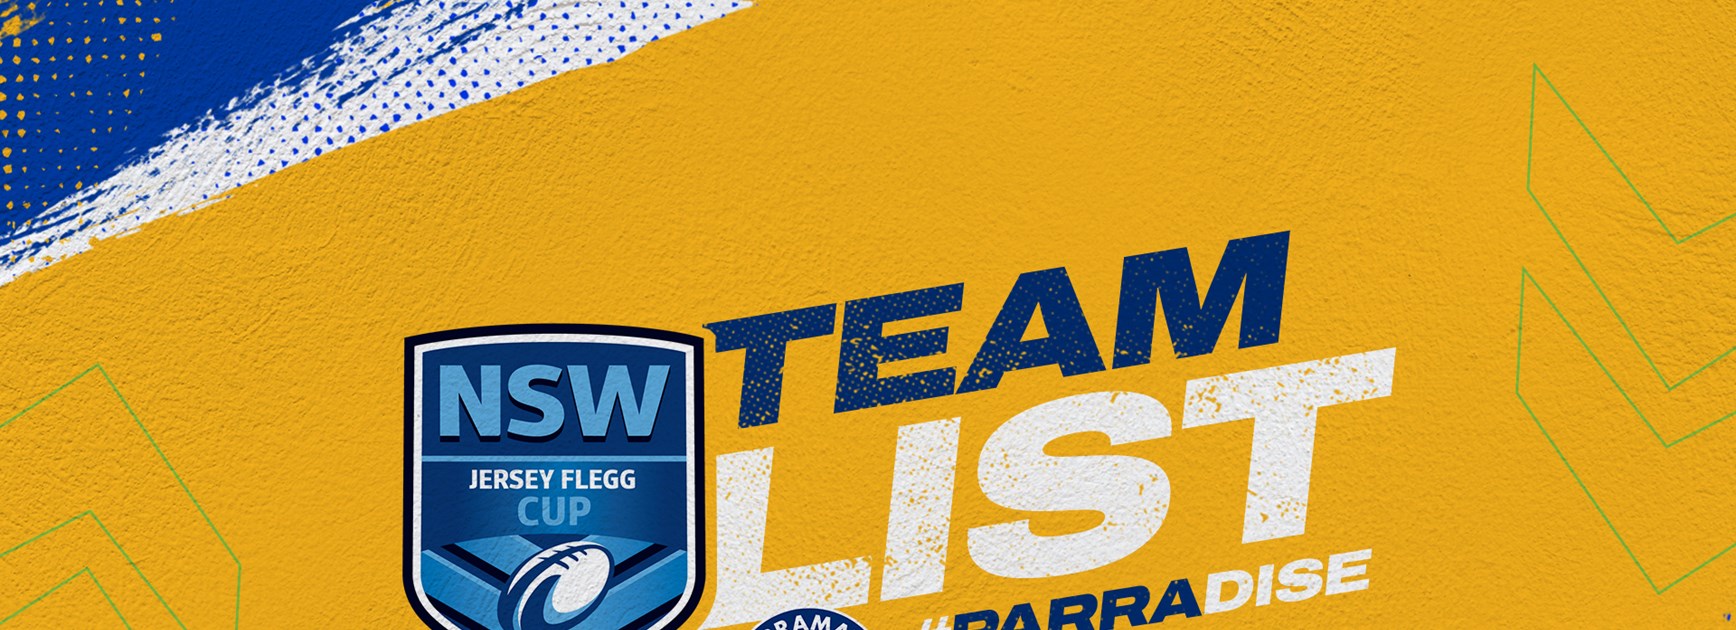 Jersey Flegg Cup Team List - Eels v Knights, Round 24